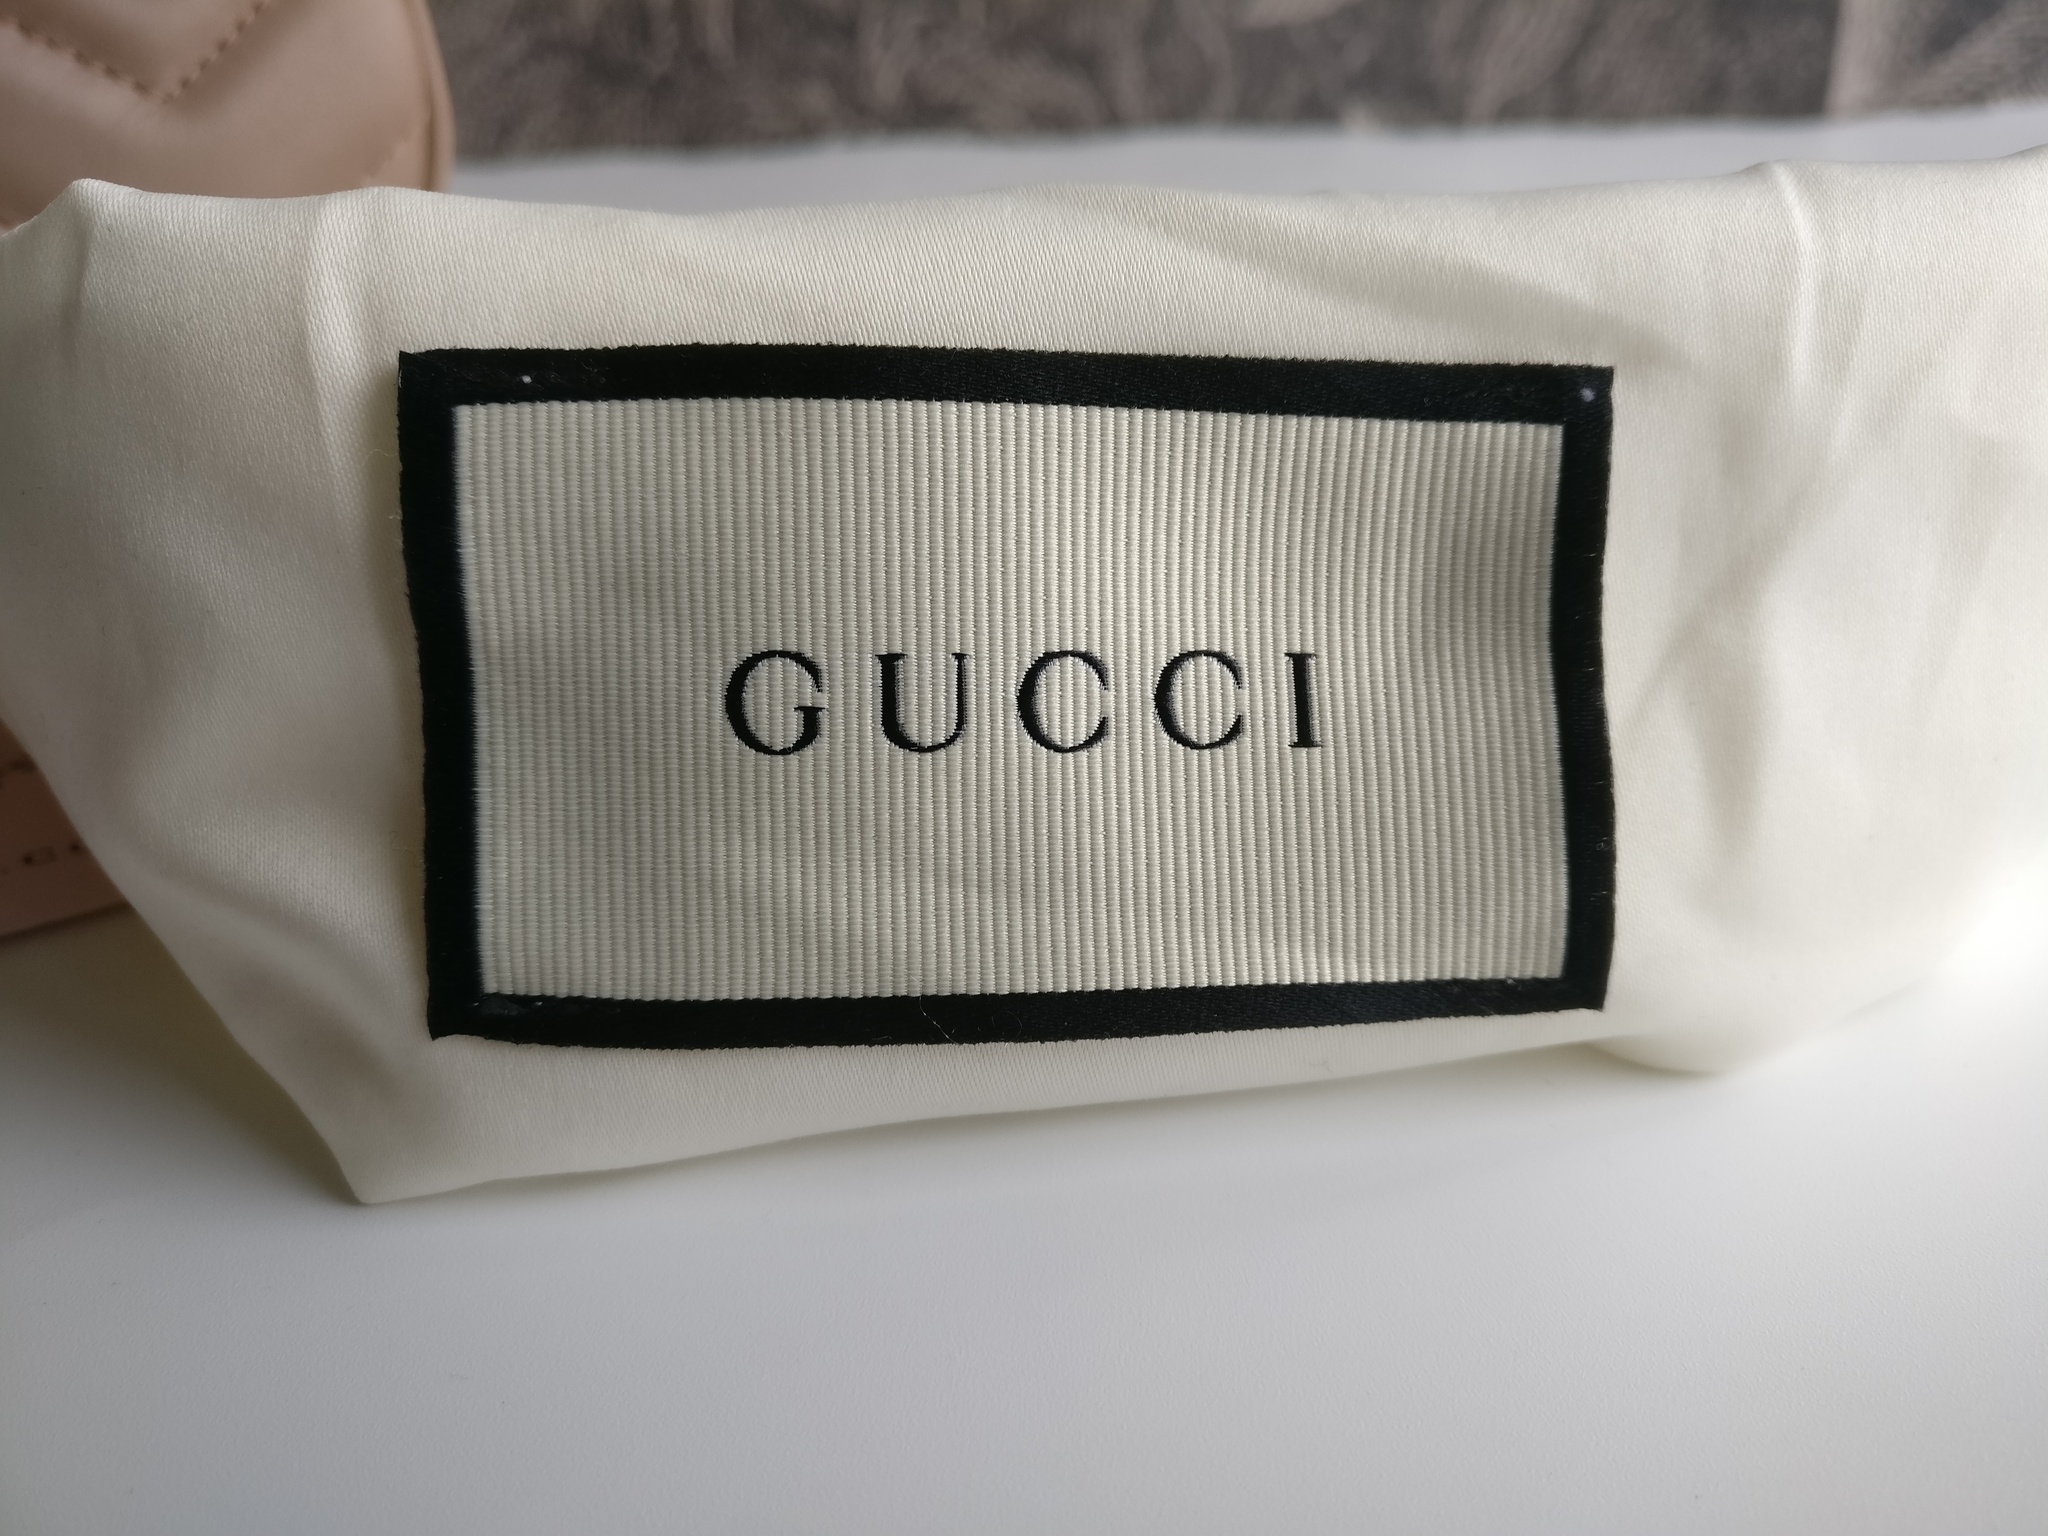 Gucci Marmont Belt Bag